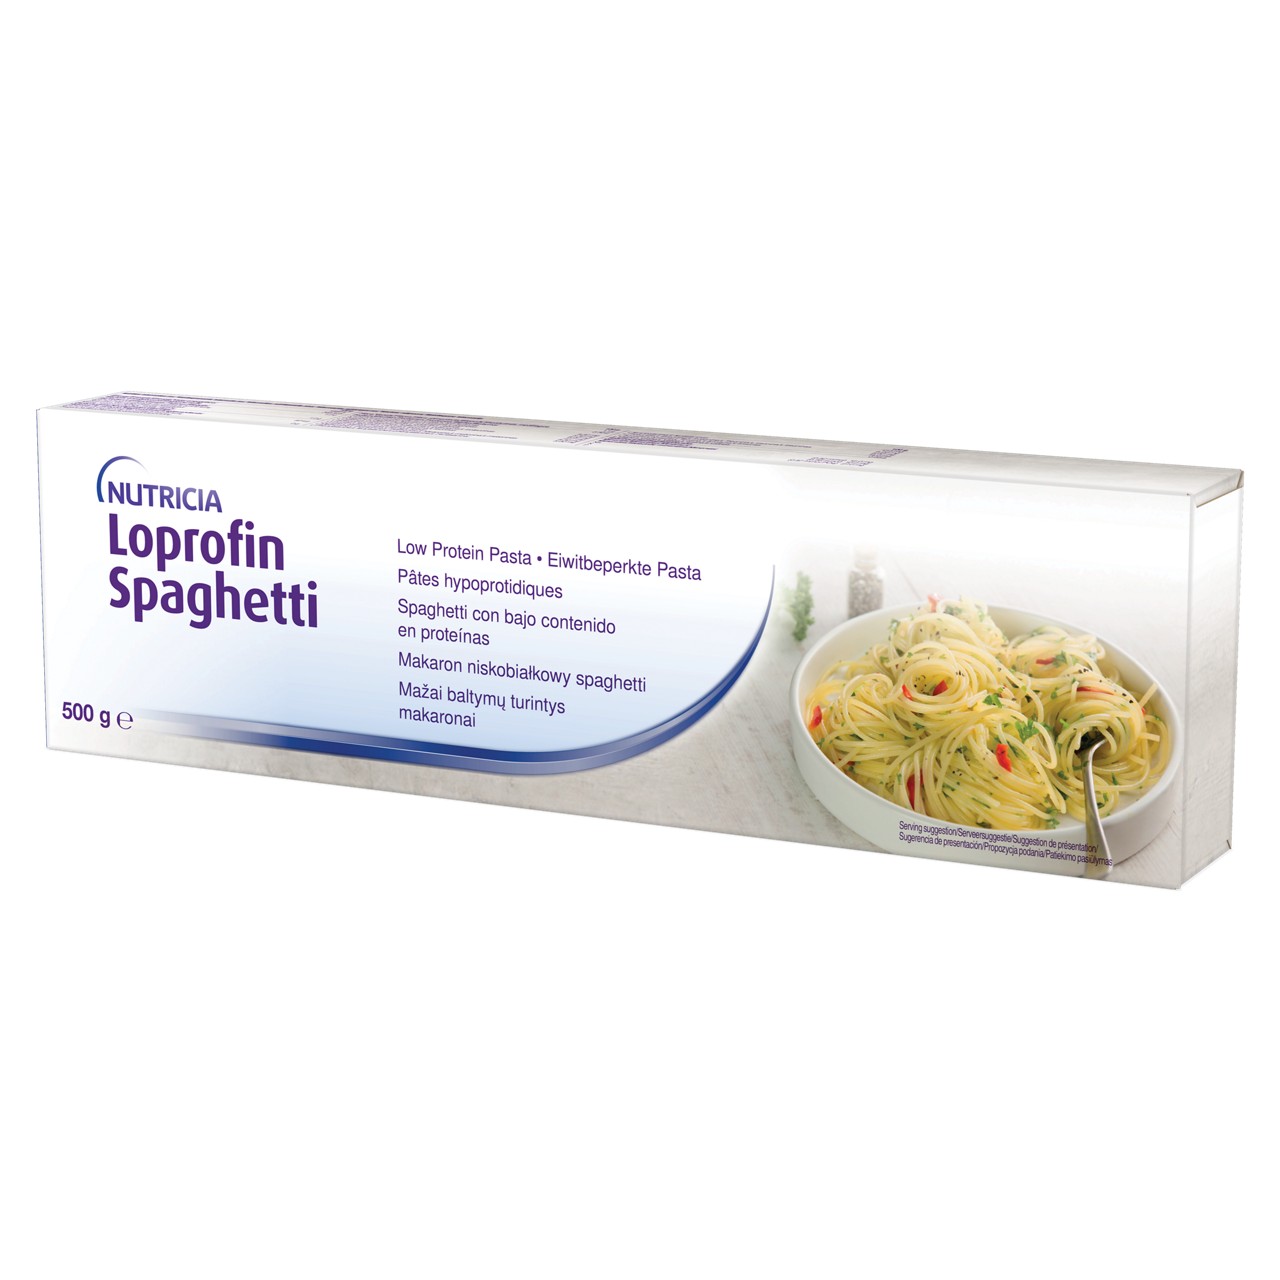 Loprofin Low Protein Pasta Long Spaghetti 500g Box